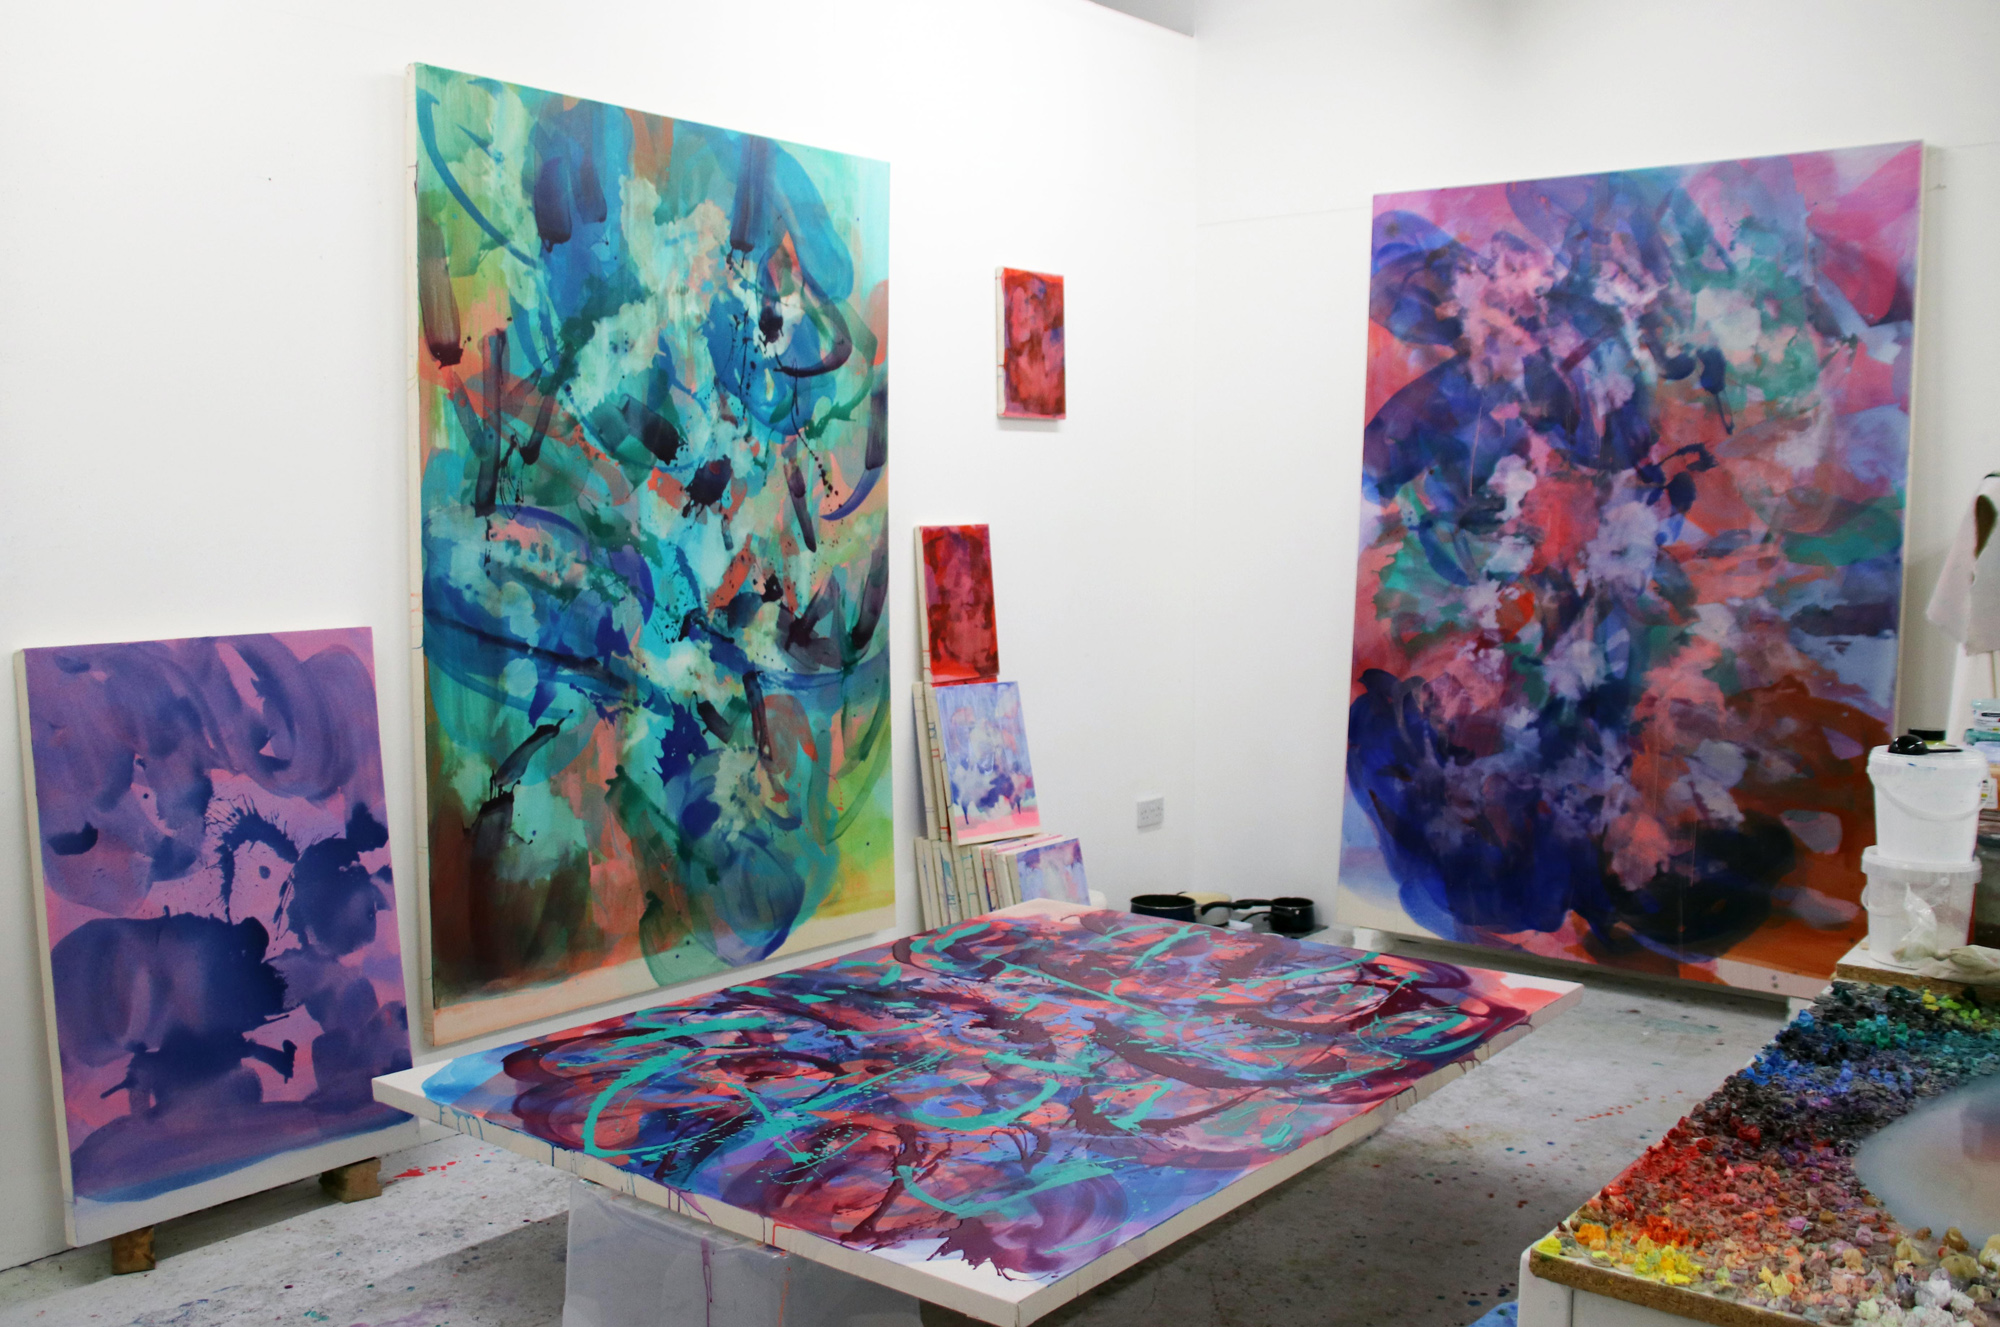  Distemper paintings  Studio shot  work in progress  2019 